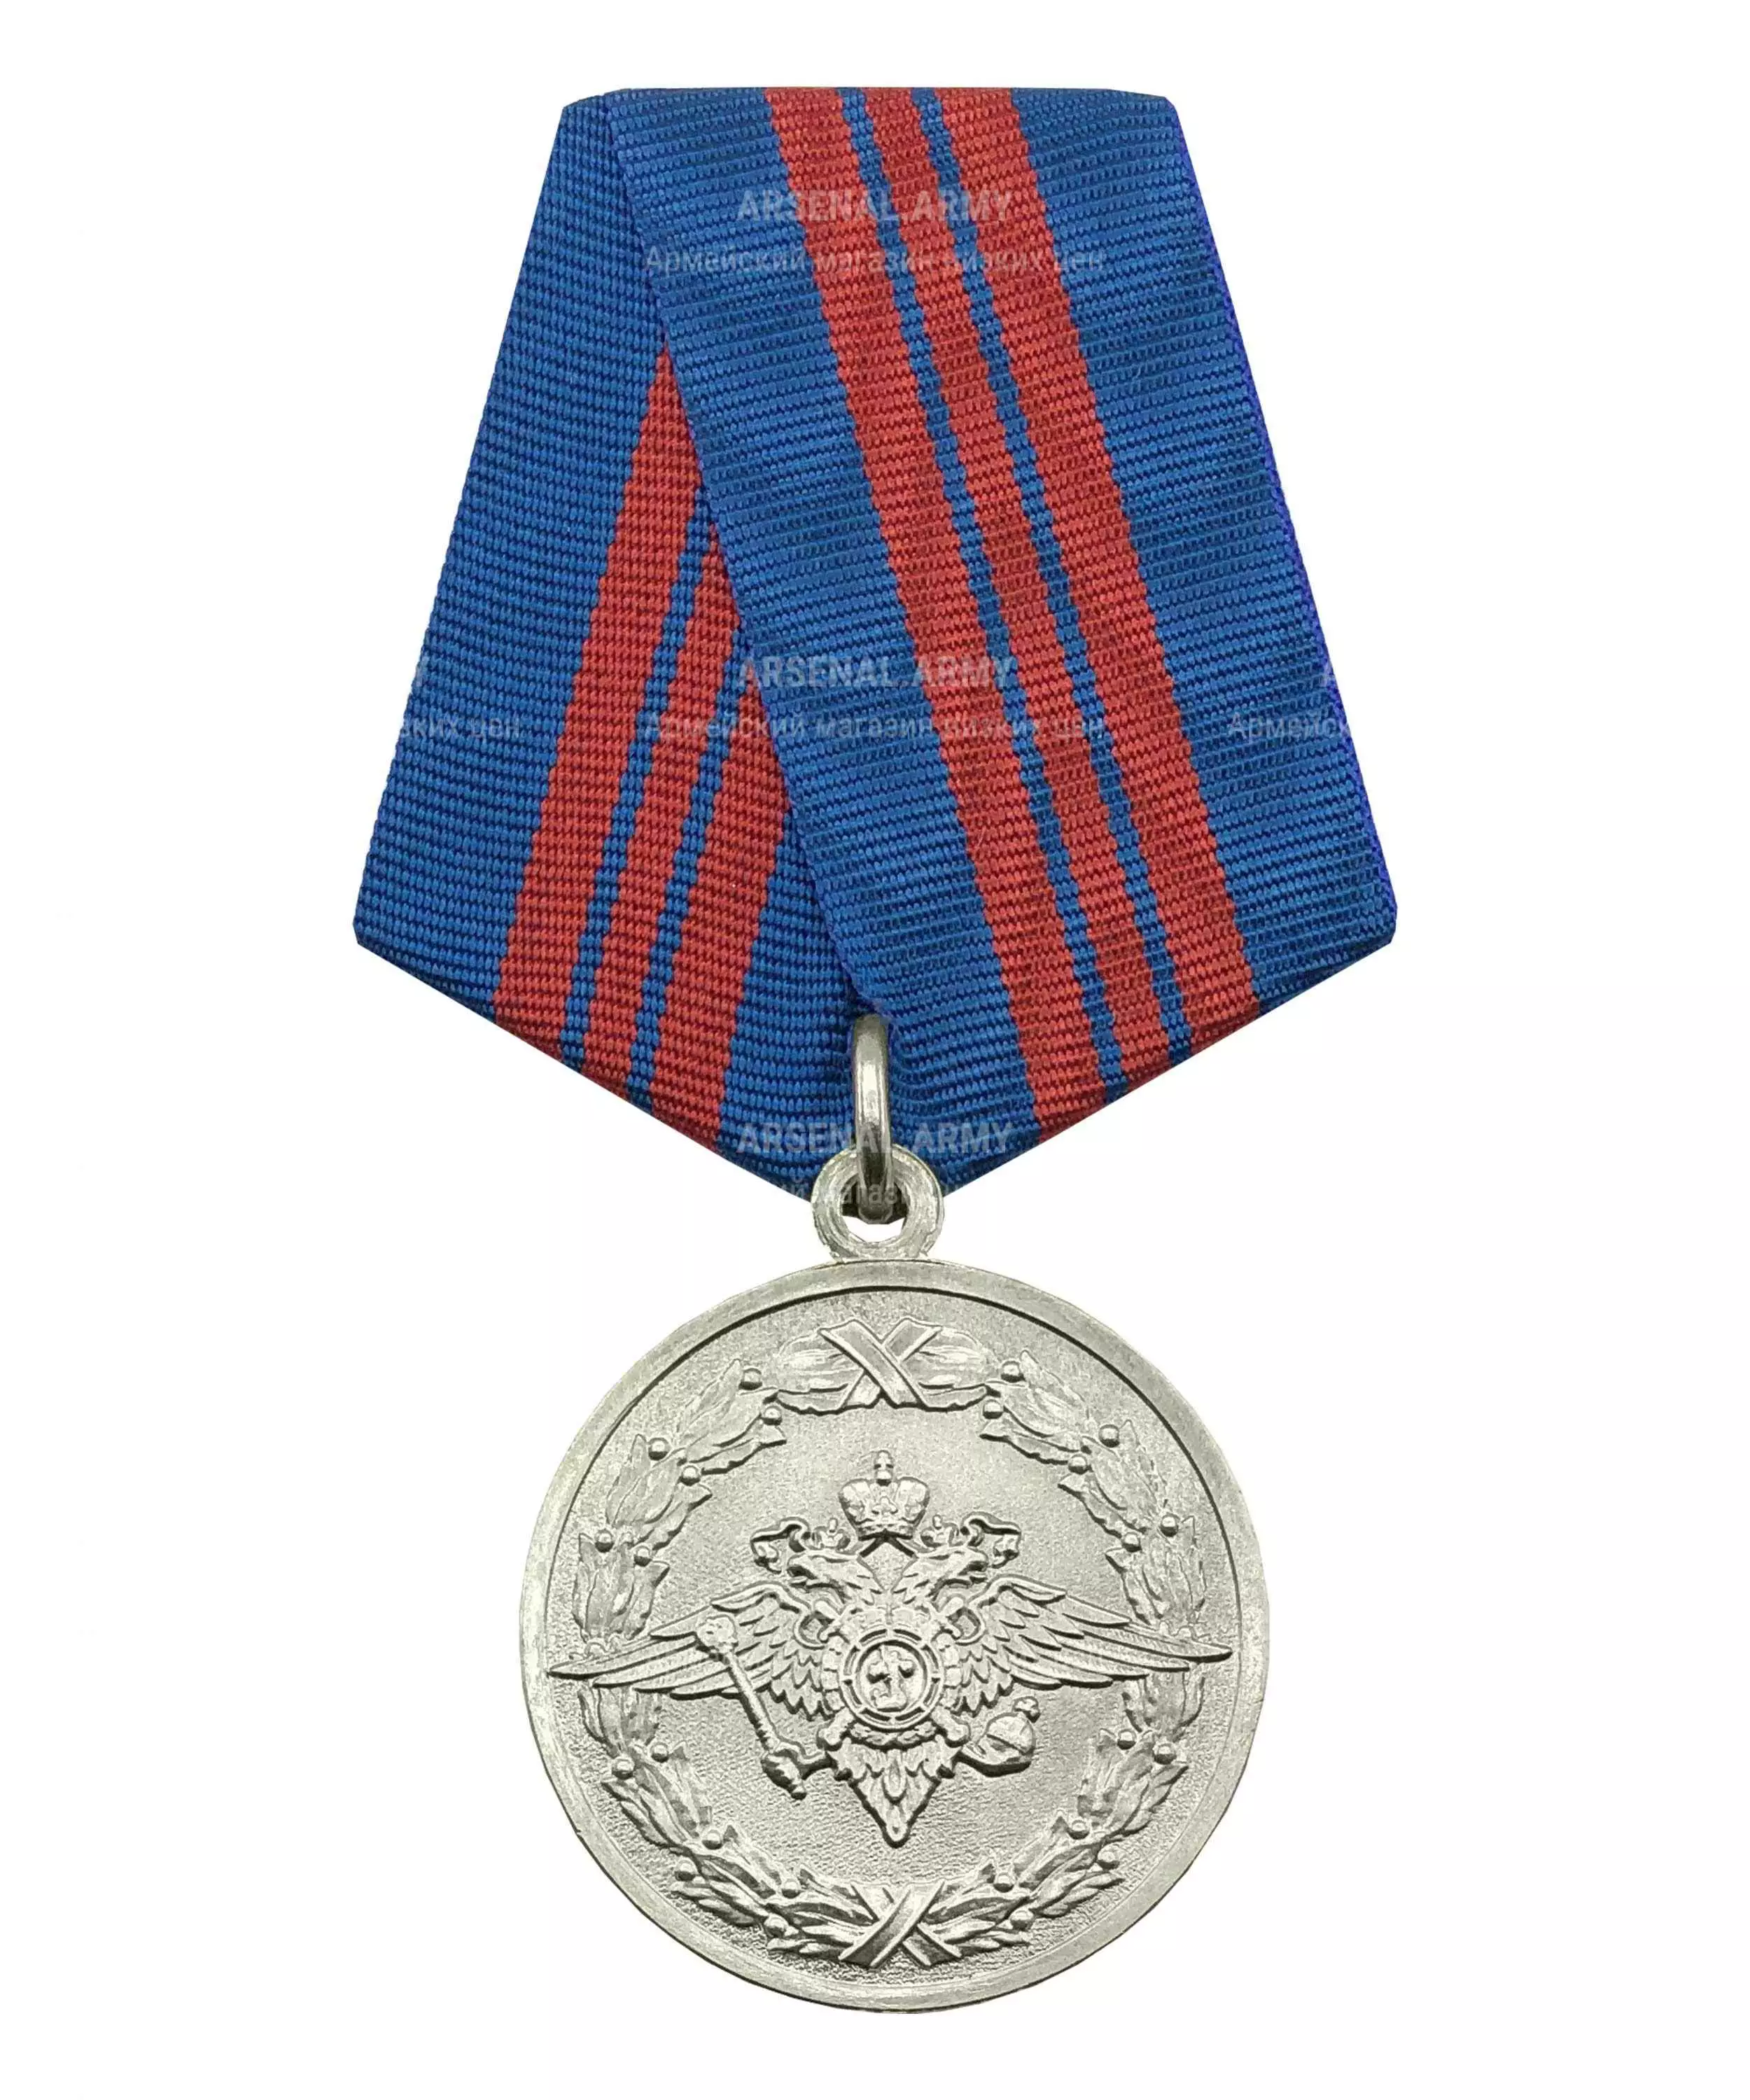 Медаль МВД "200 лет МВД" серебро — 1